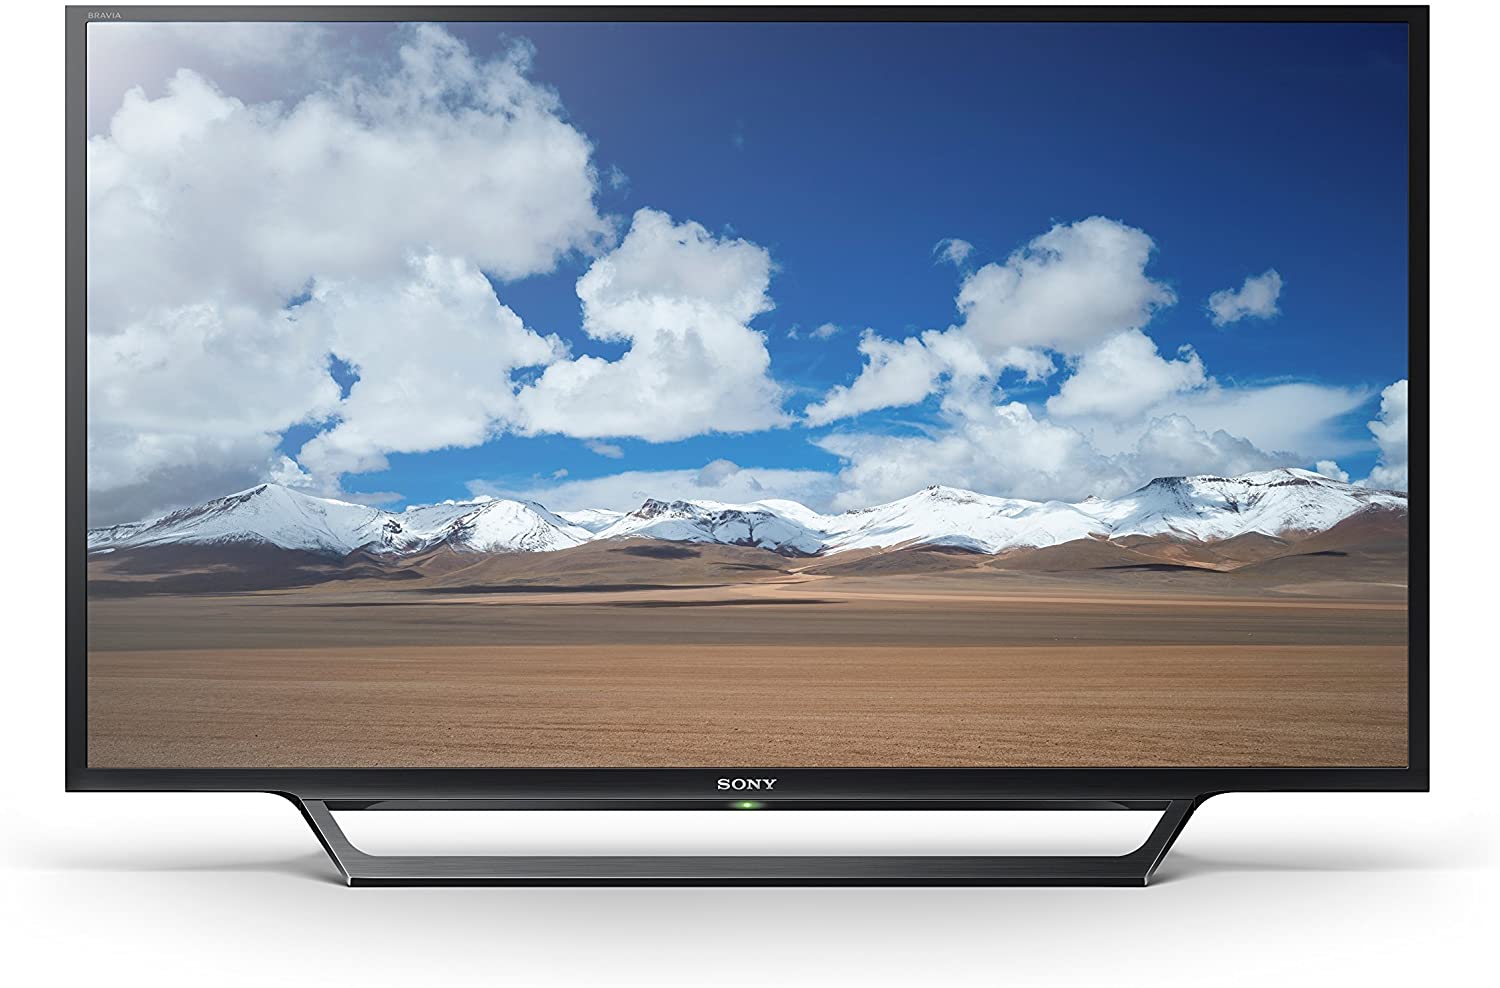 Sony KDL32W600D 720p Smart LED TV, 32-Inch